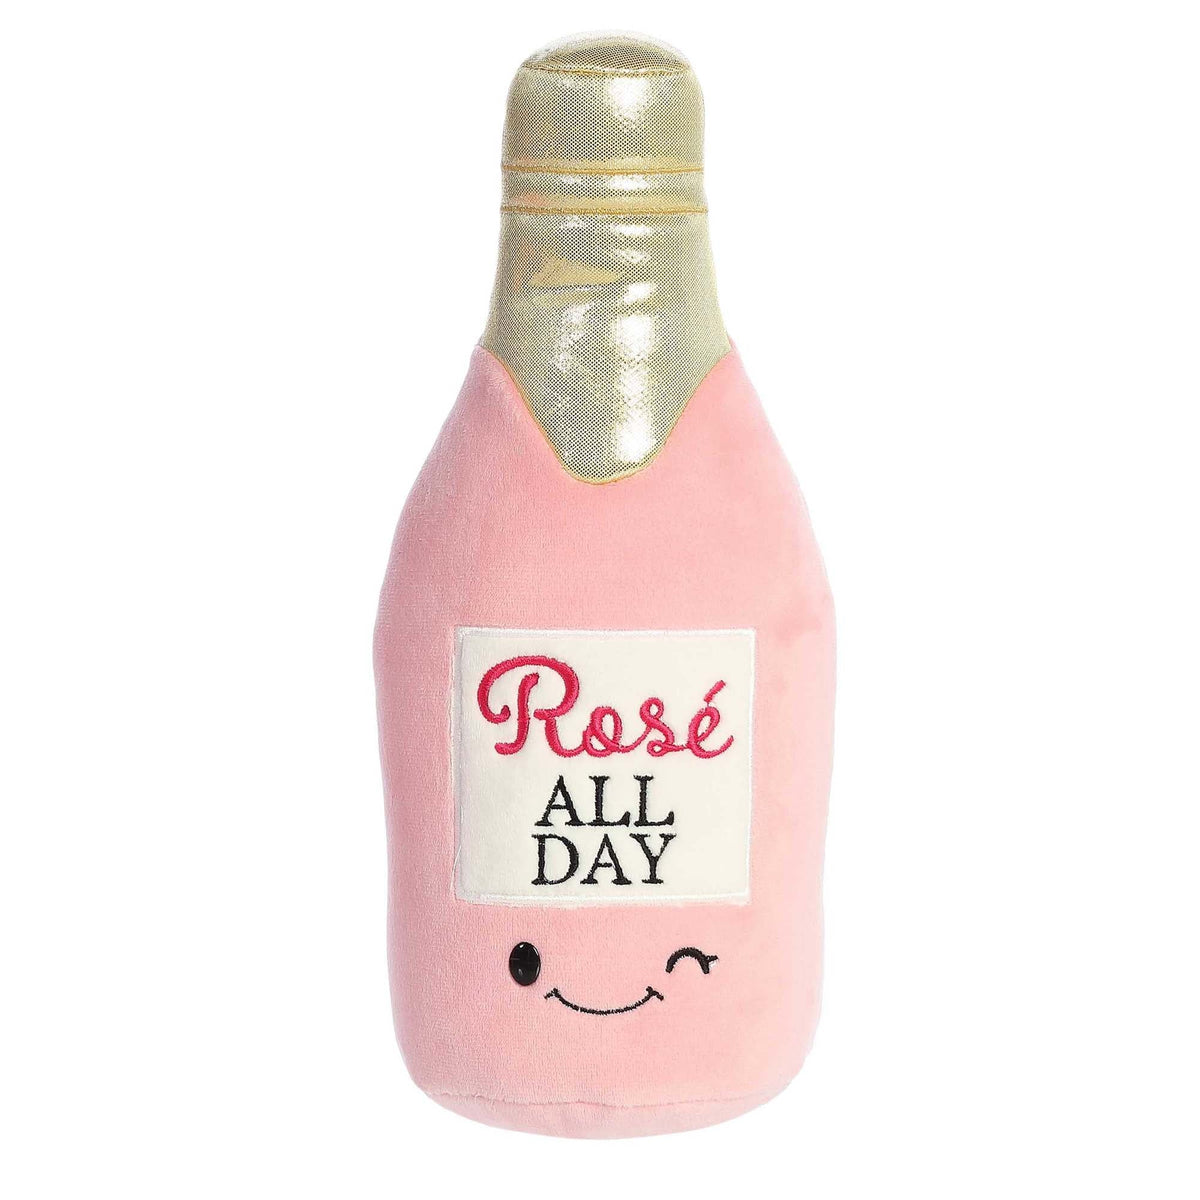 Aurora World Valentine's Day "Rosé All Day" Wine Bottle Plush, 11.5 Inches, 1 Count